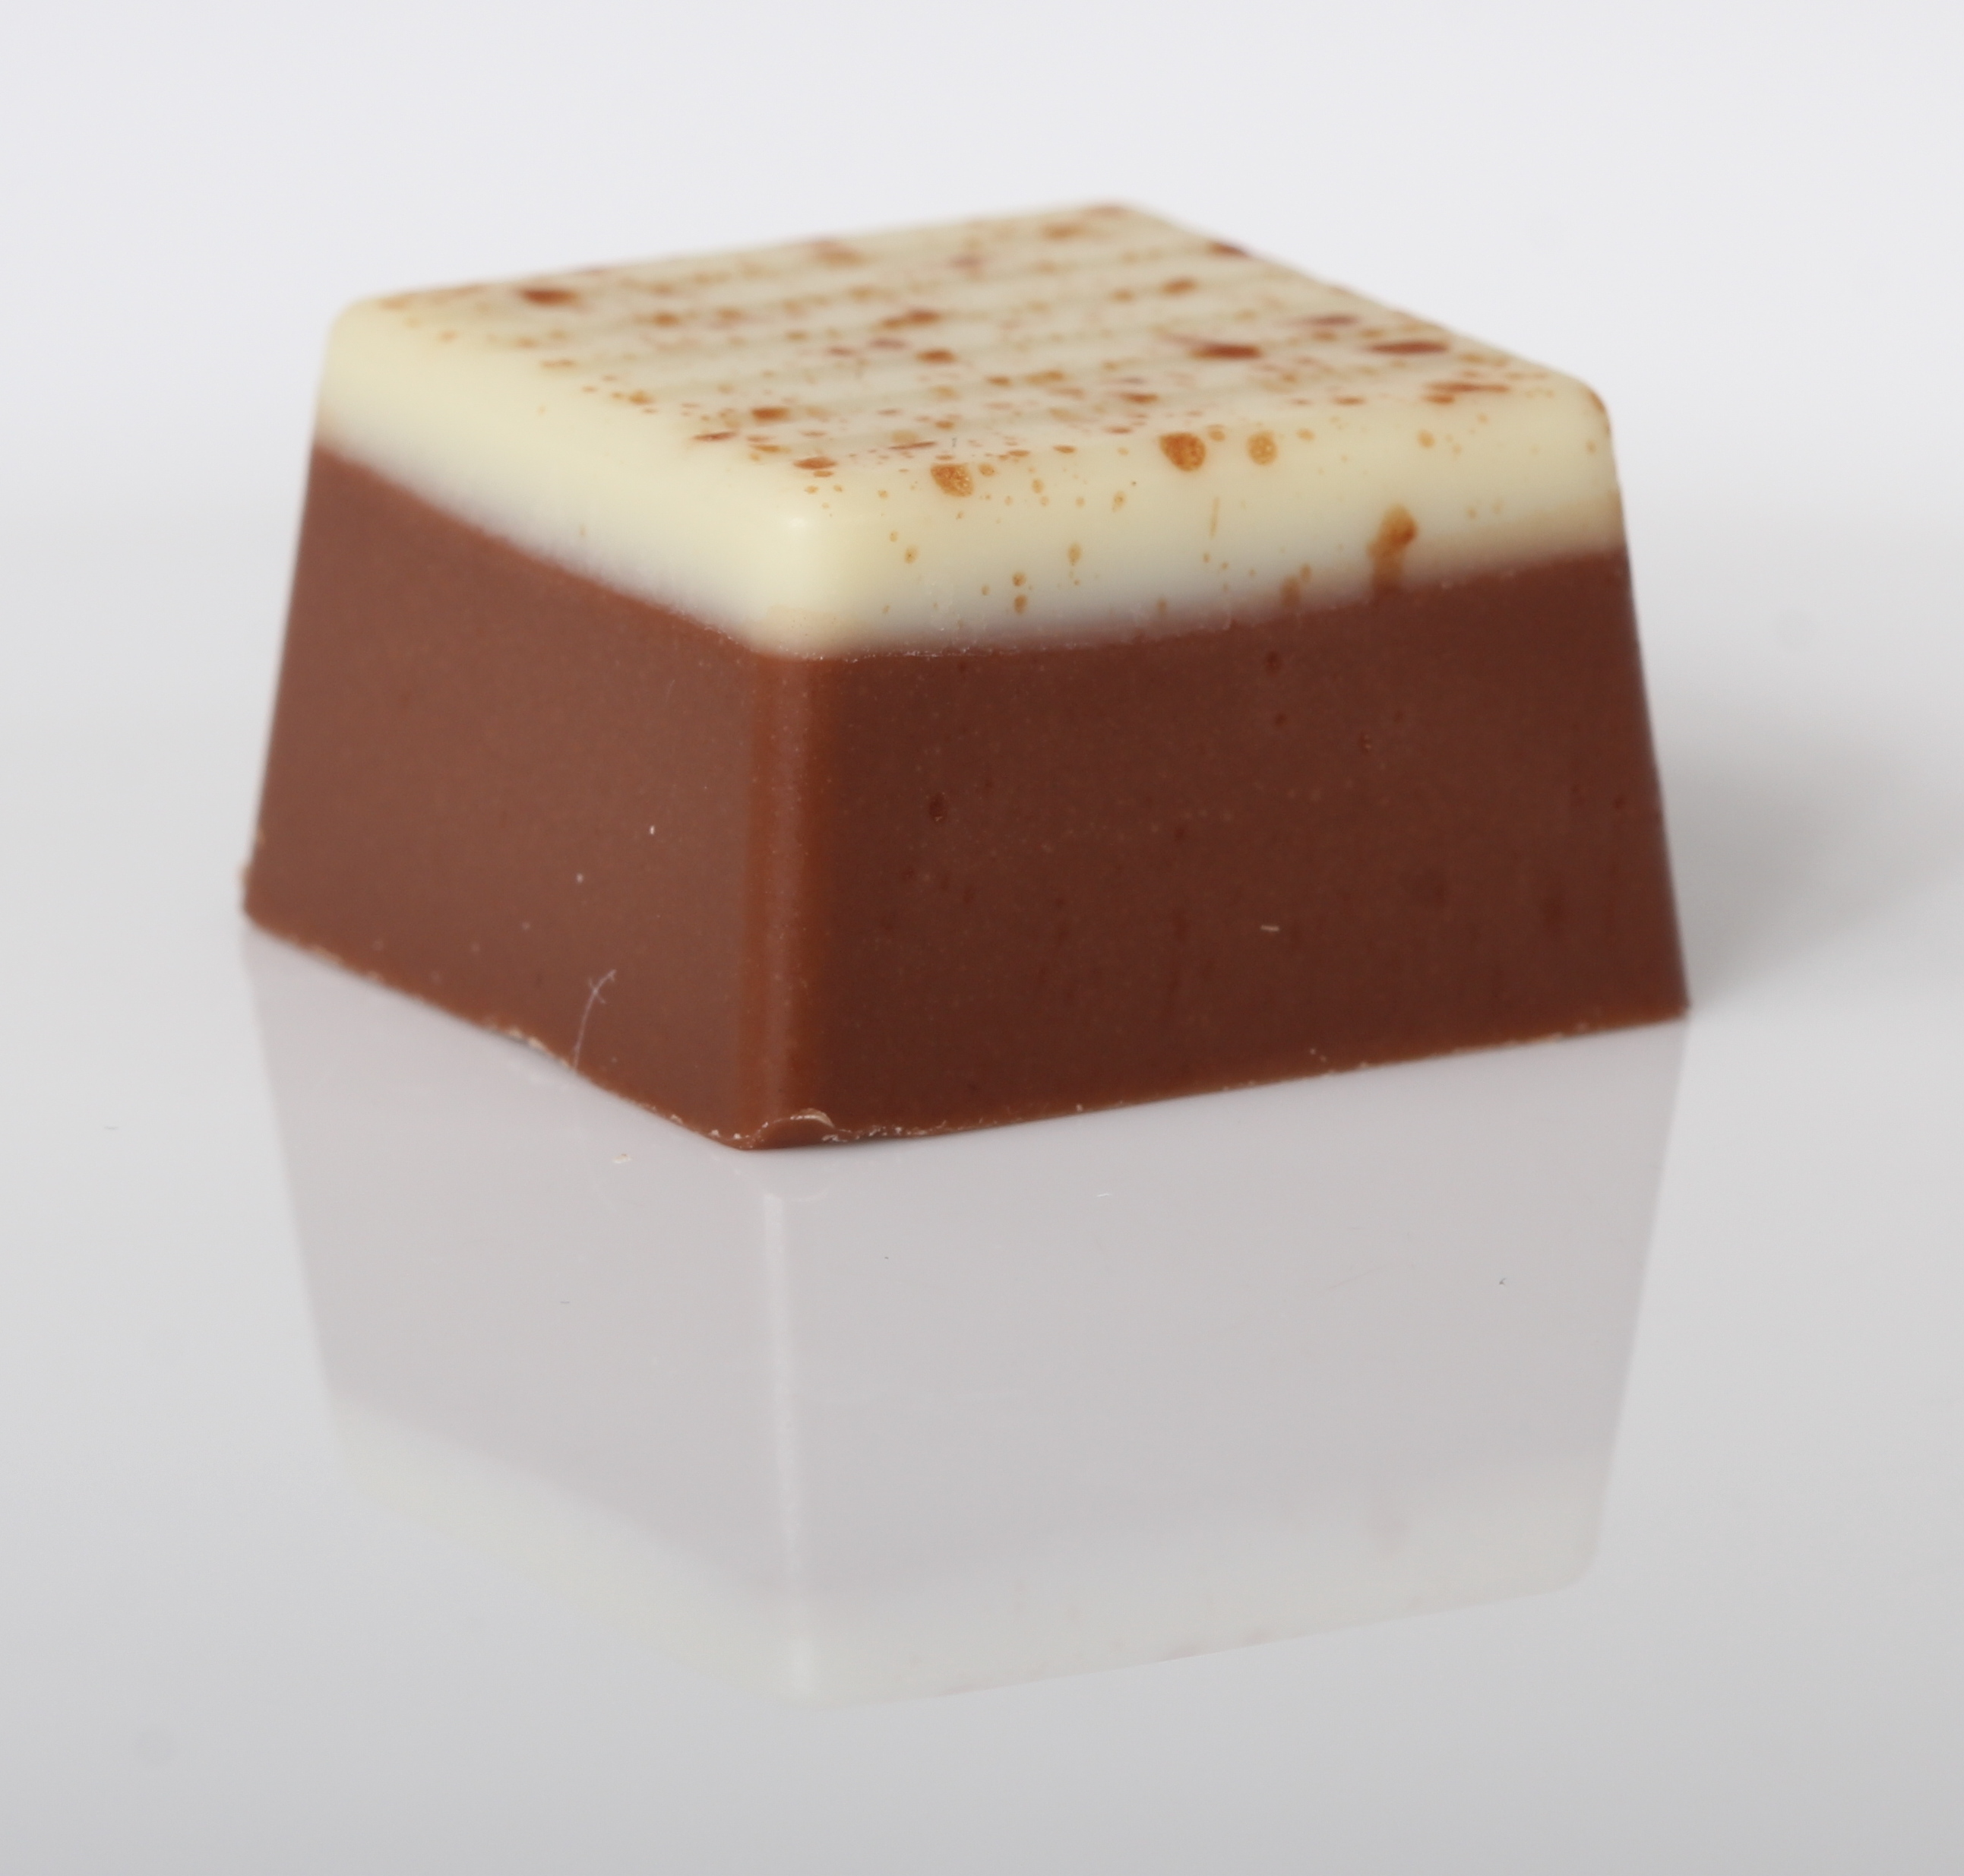 File:Chocolats Lindt Création Dessert Tiramisu - 1.jpg - Wikipedia